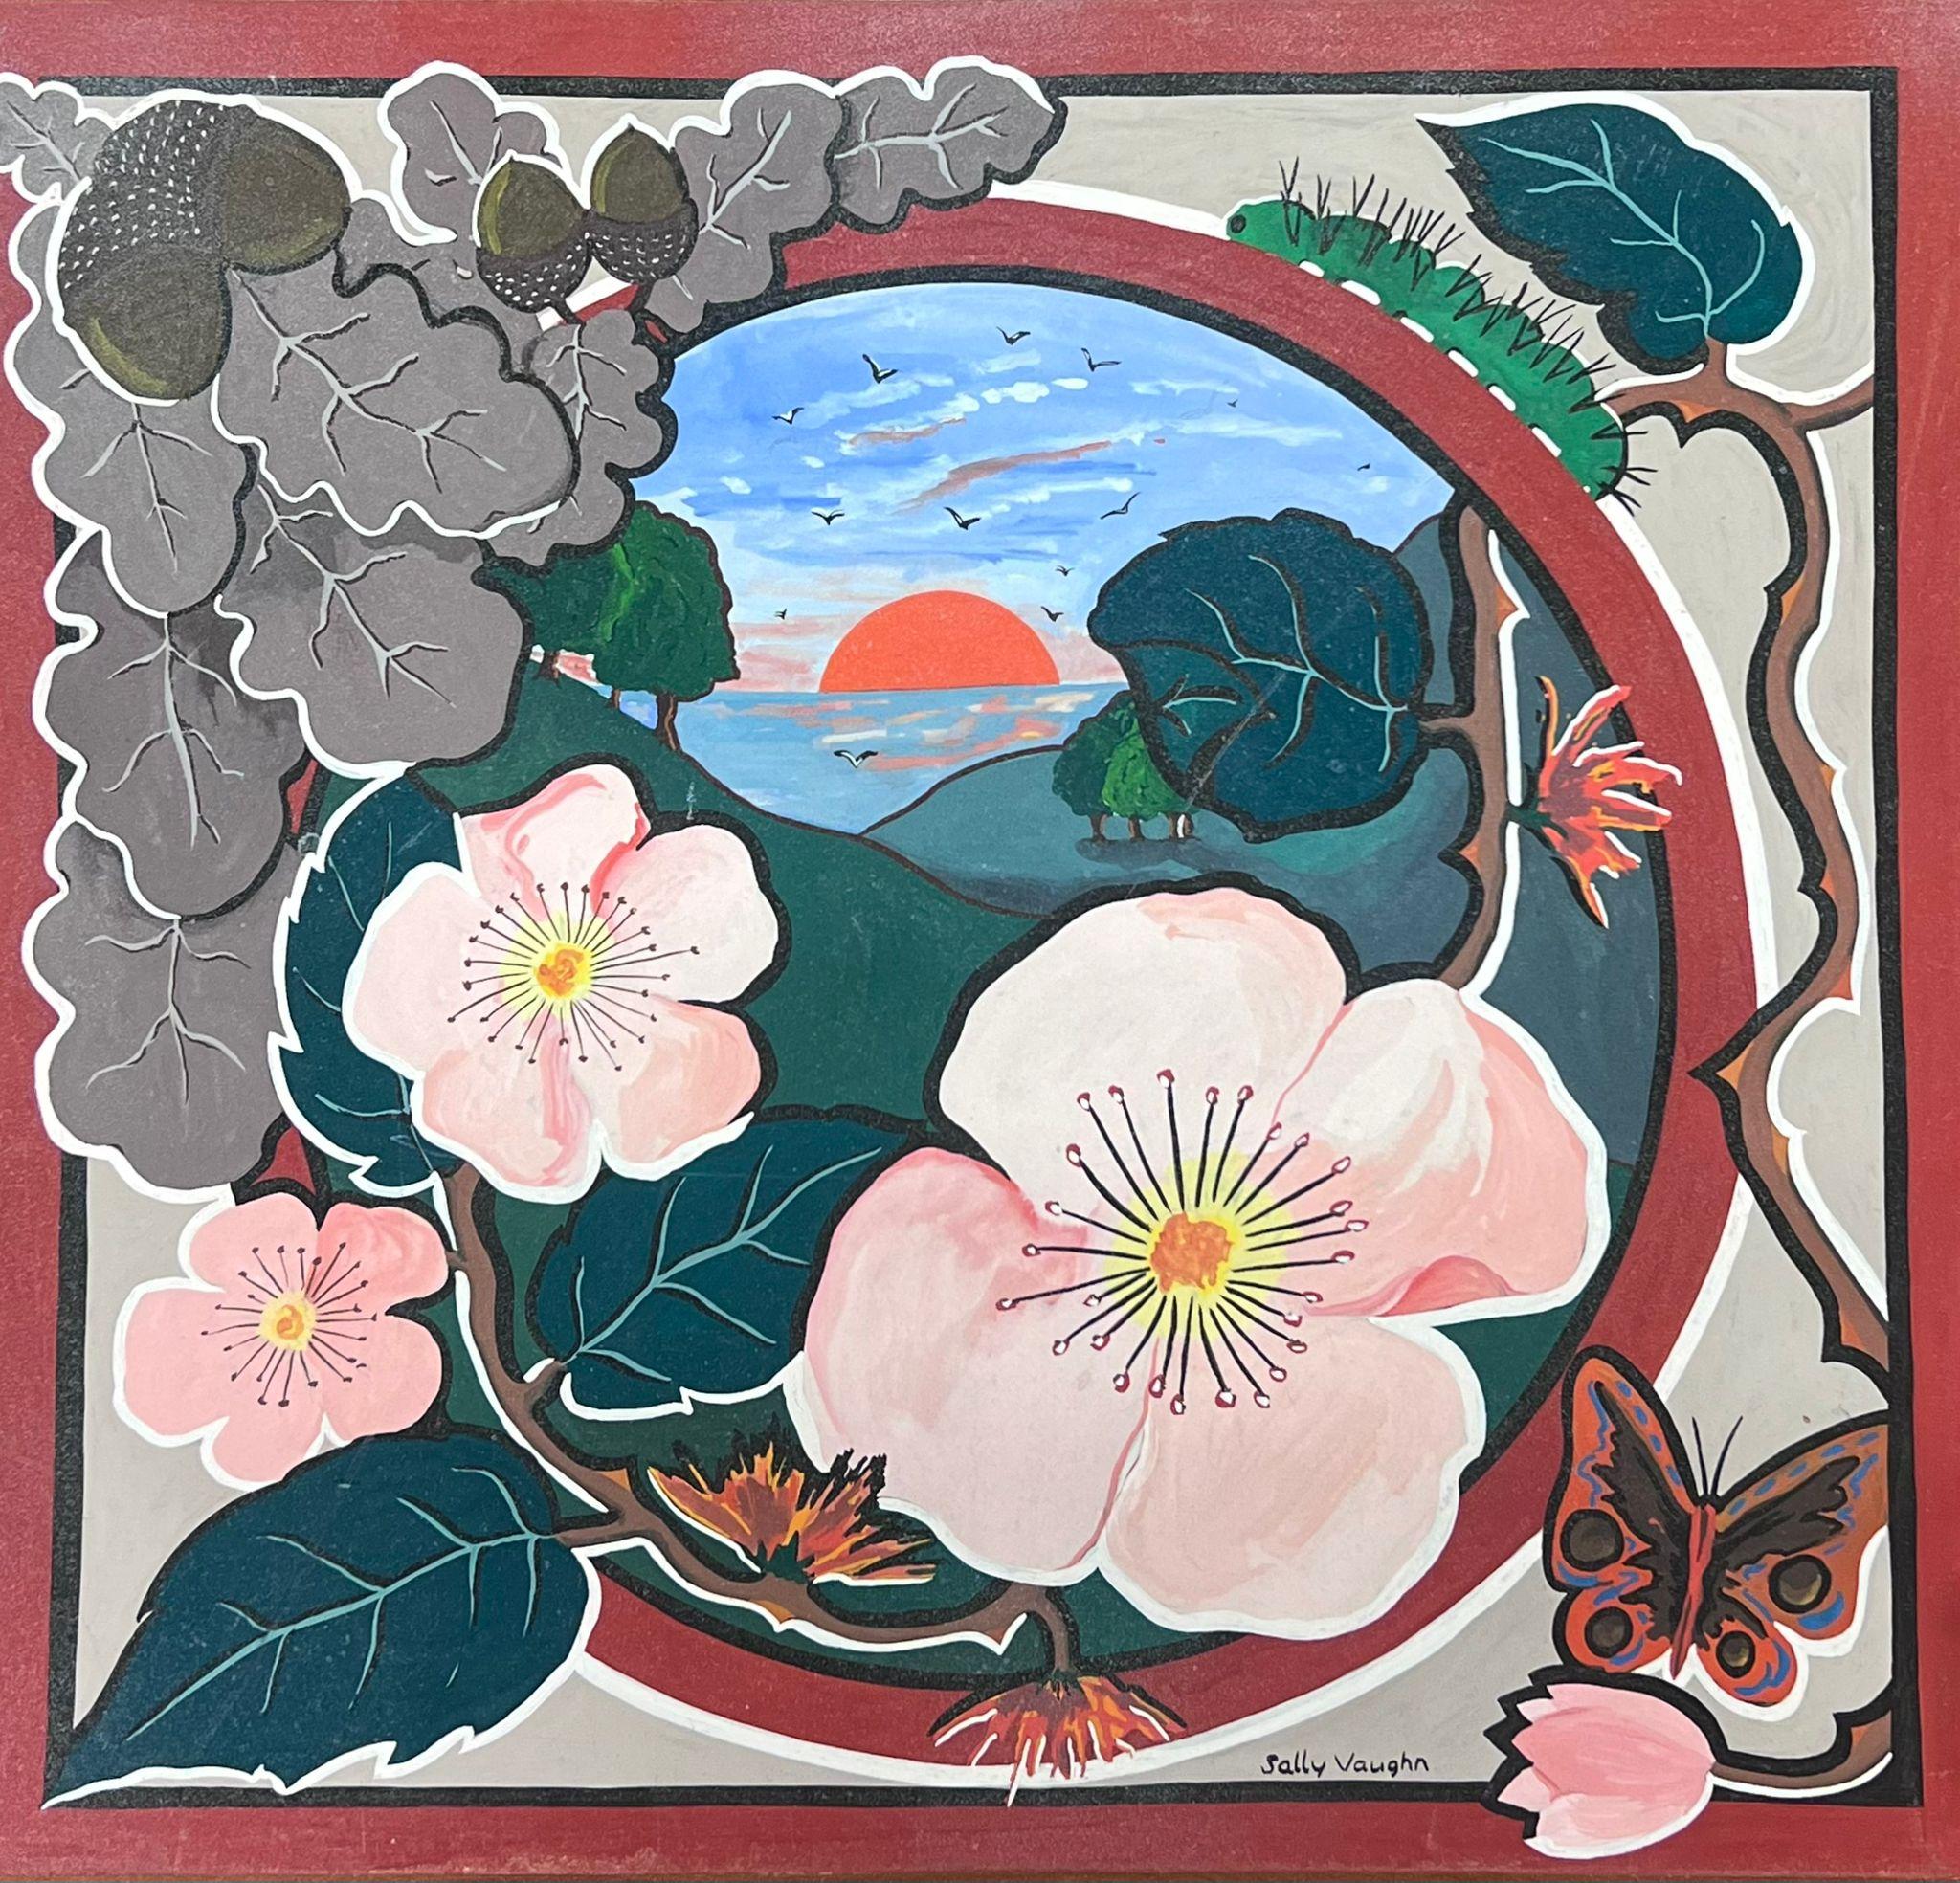 Sally Vaughan Abstract Painting – Contemporary British Abstract Original Gemälde Blumen Schmetterling Landschaft